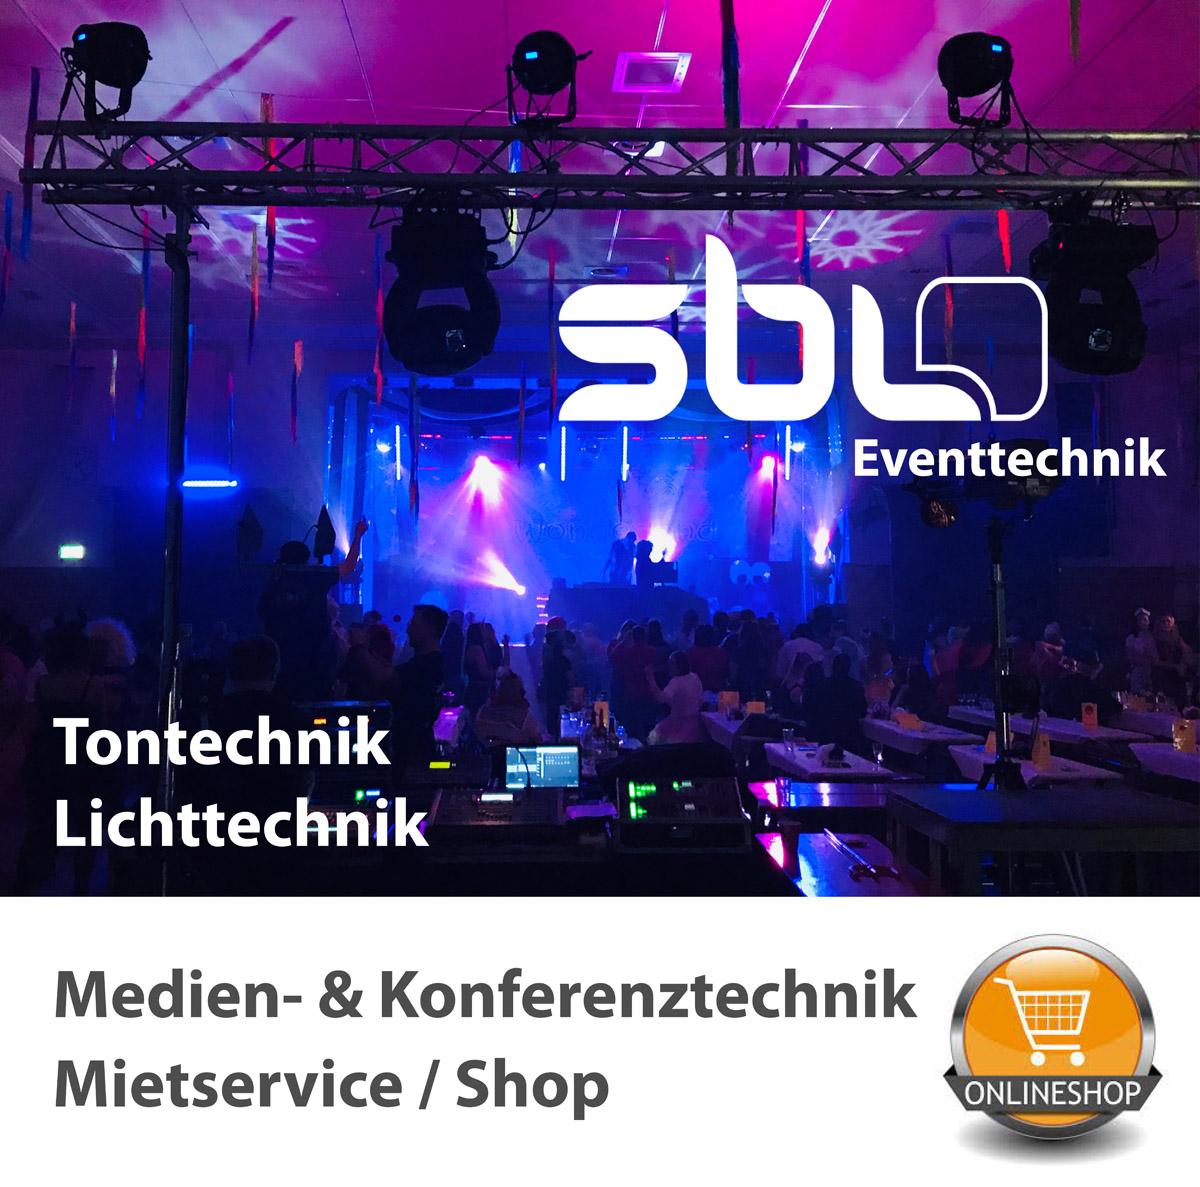 (c) Sbl-eventtechnik.com